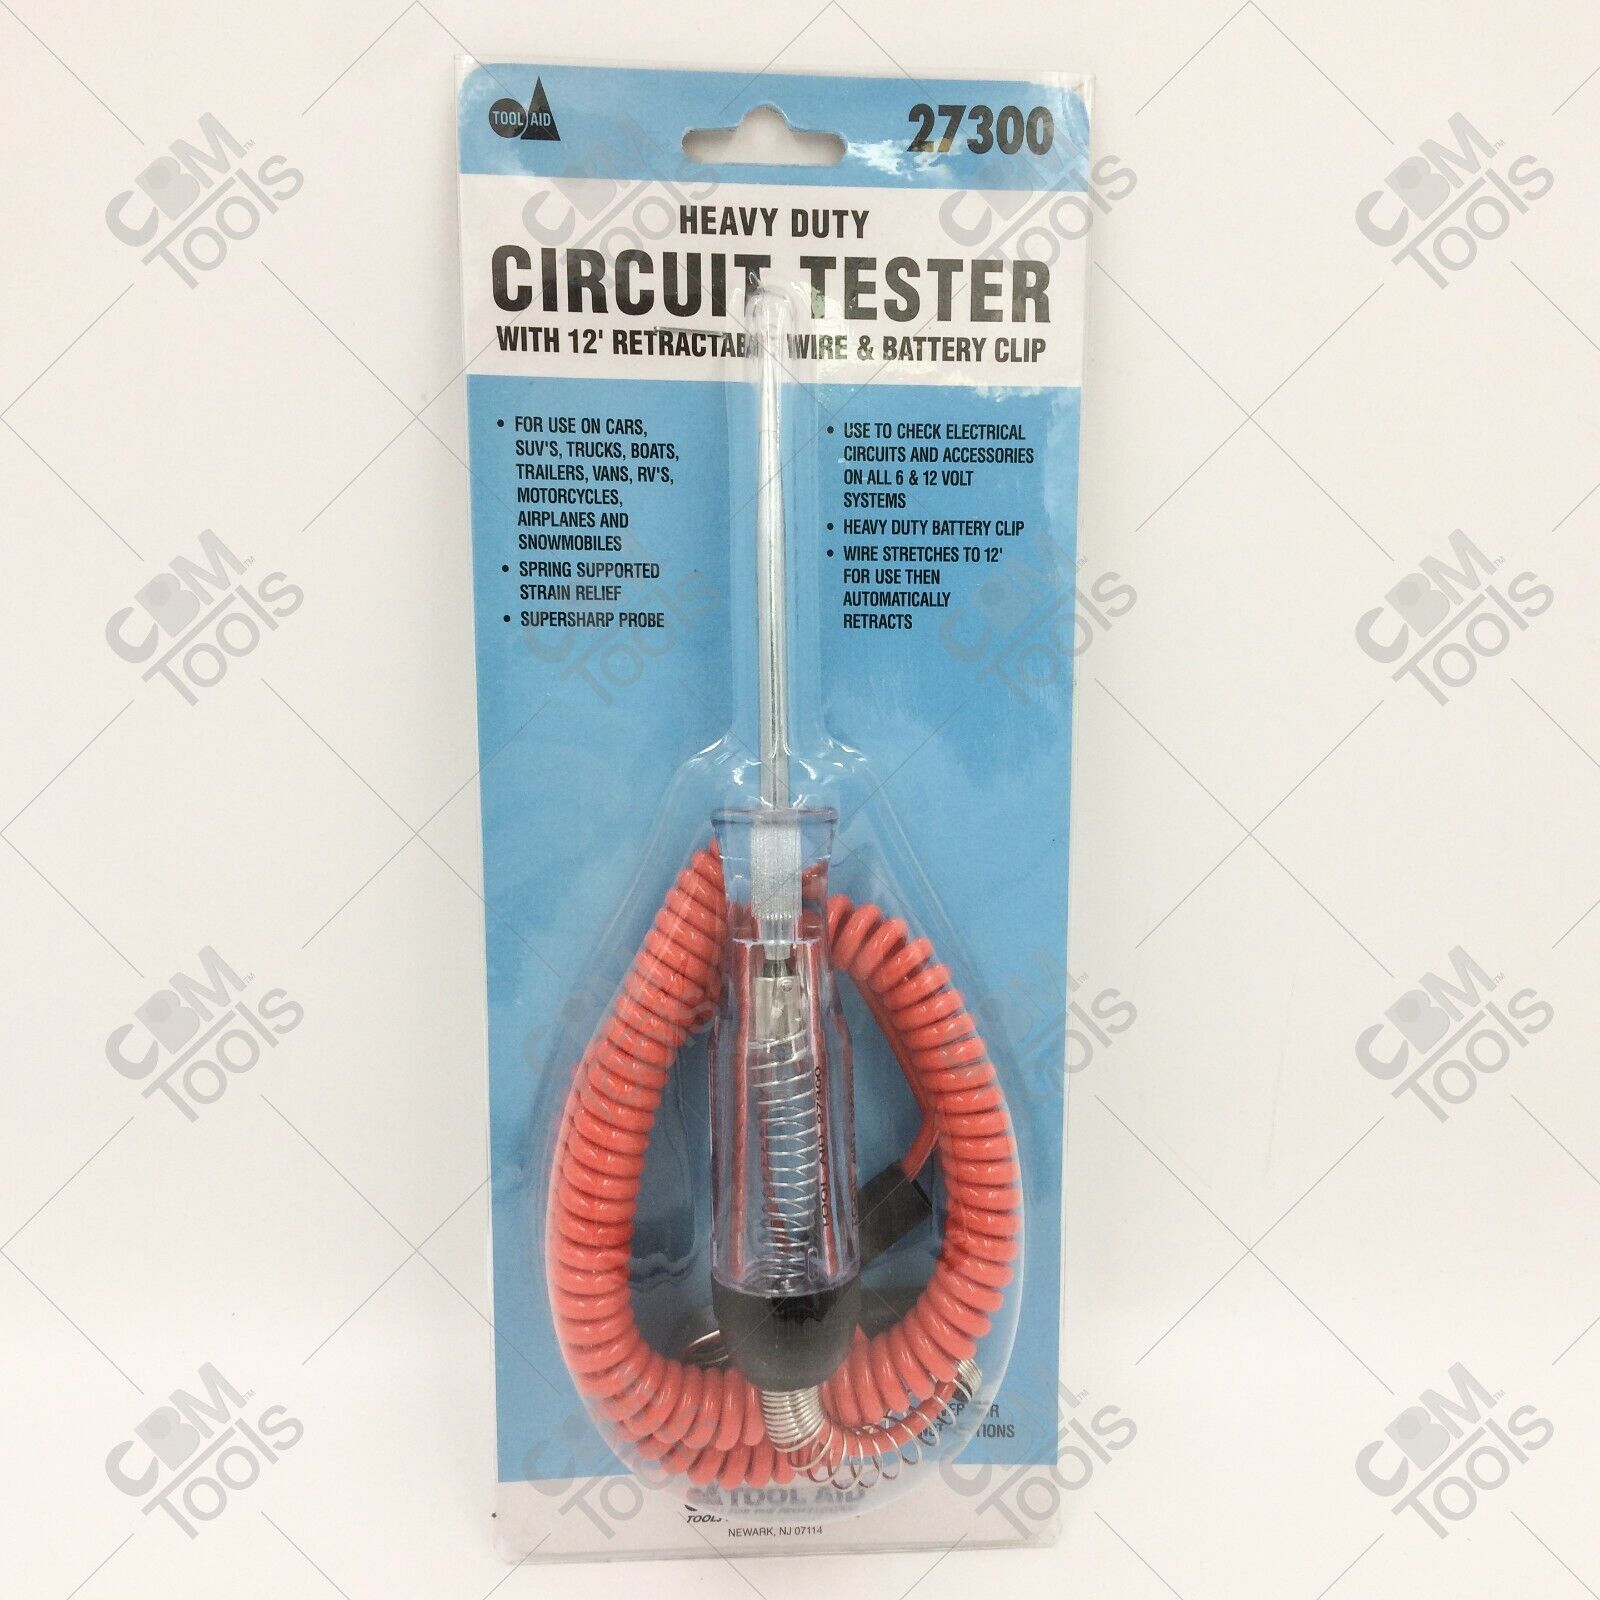 Tool Aid 27300 Heavy Duty Circuit Tester